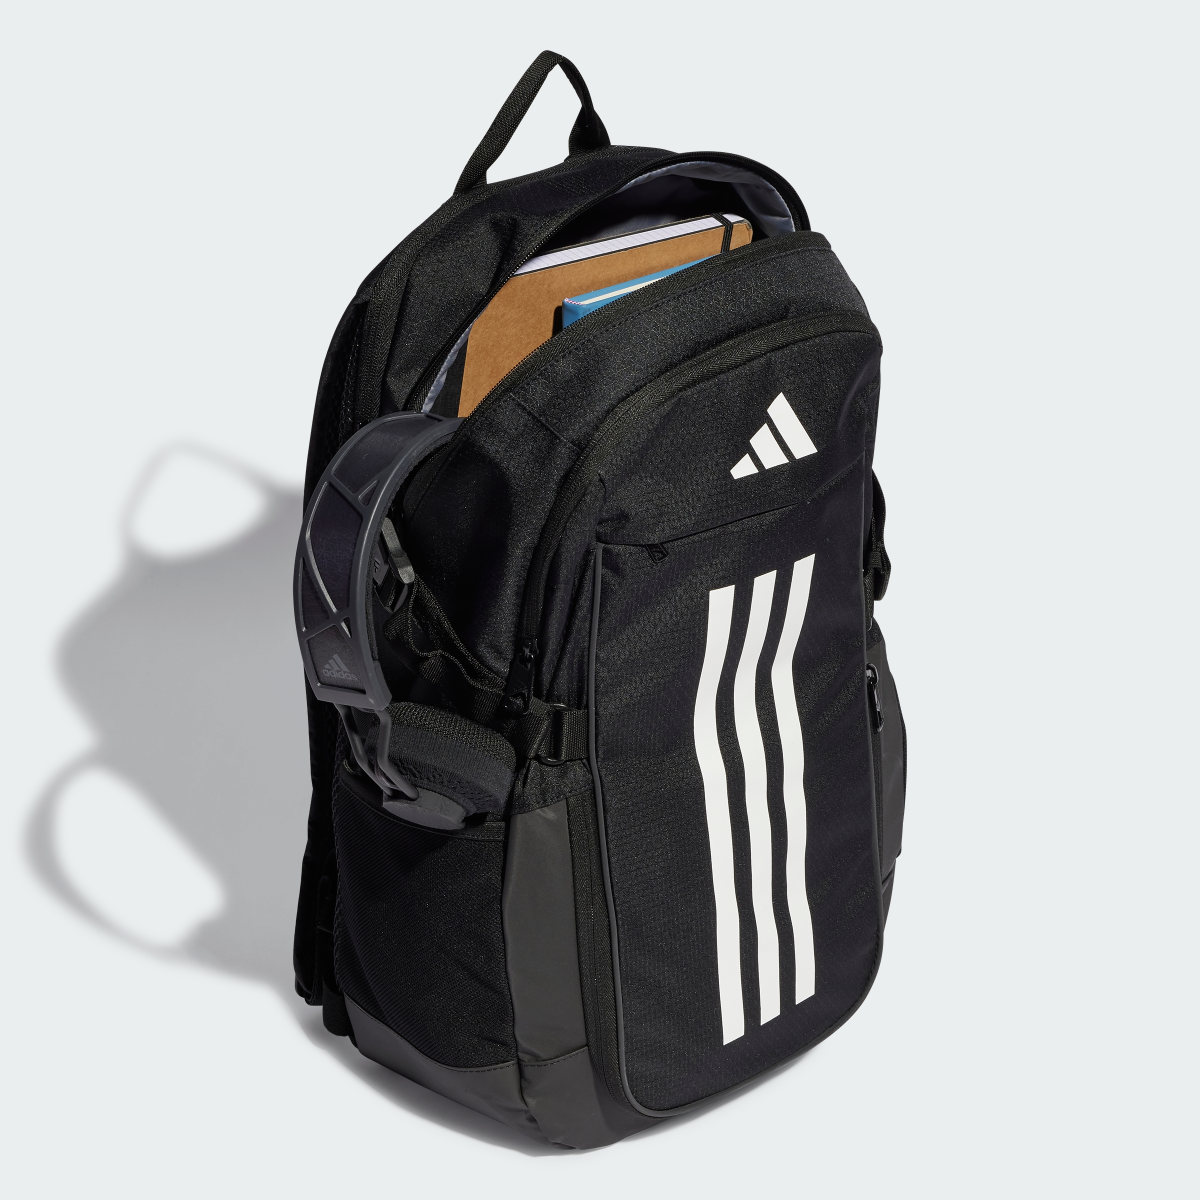 Adidas Backpack. 5